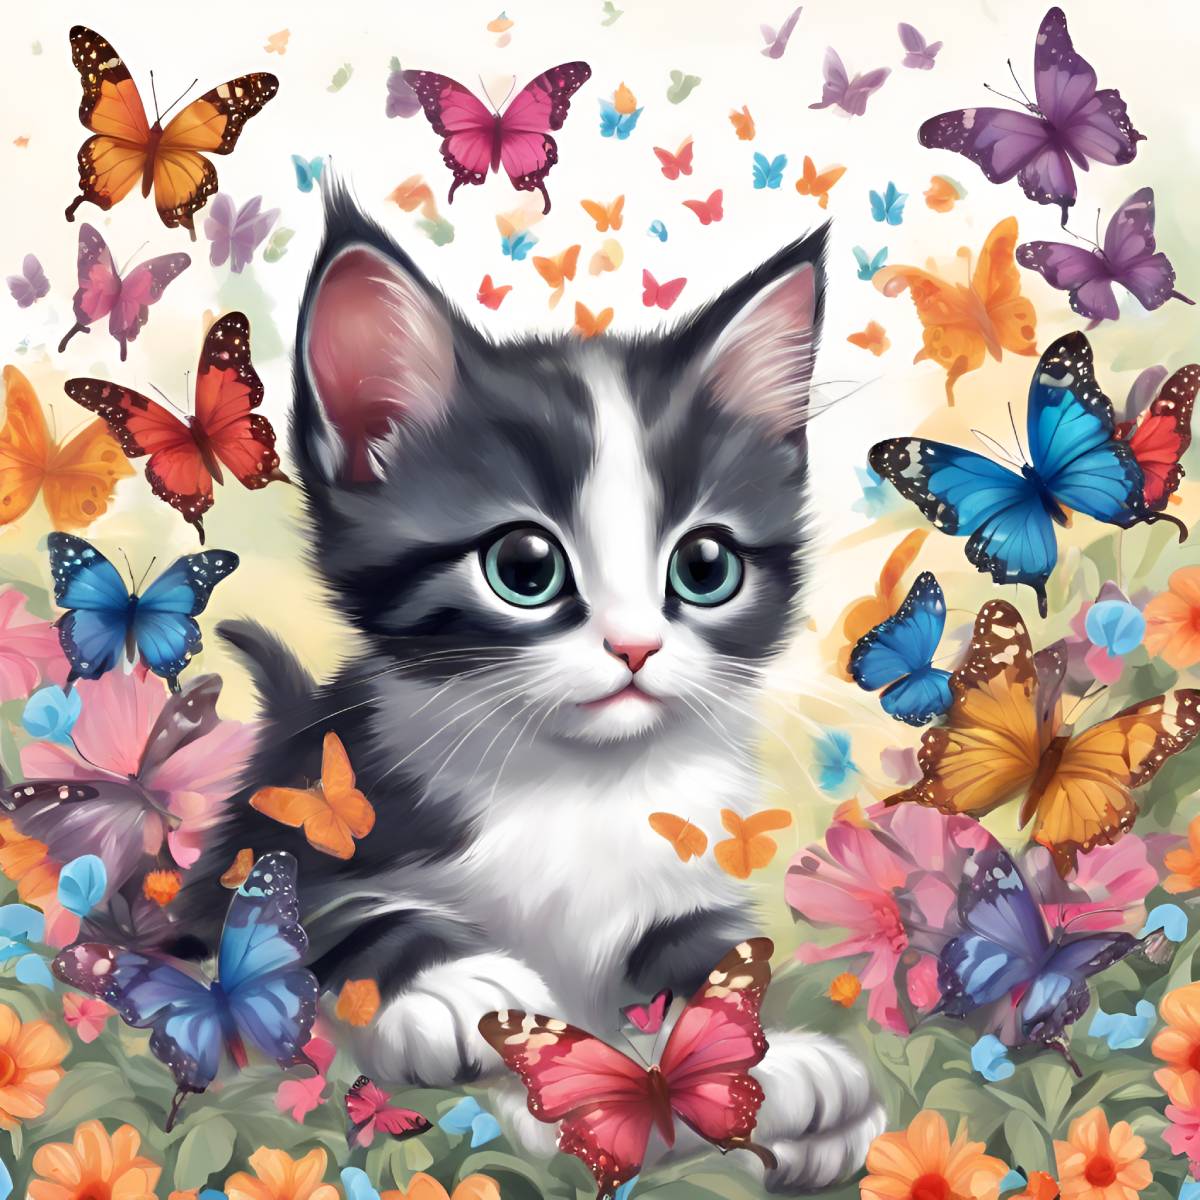 Diamonds-Wizard-Diamond-Painting-Kits-Animals-Cat-Kitten-and-Butterfly-Friends-original.jpg